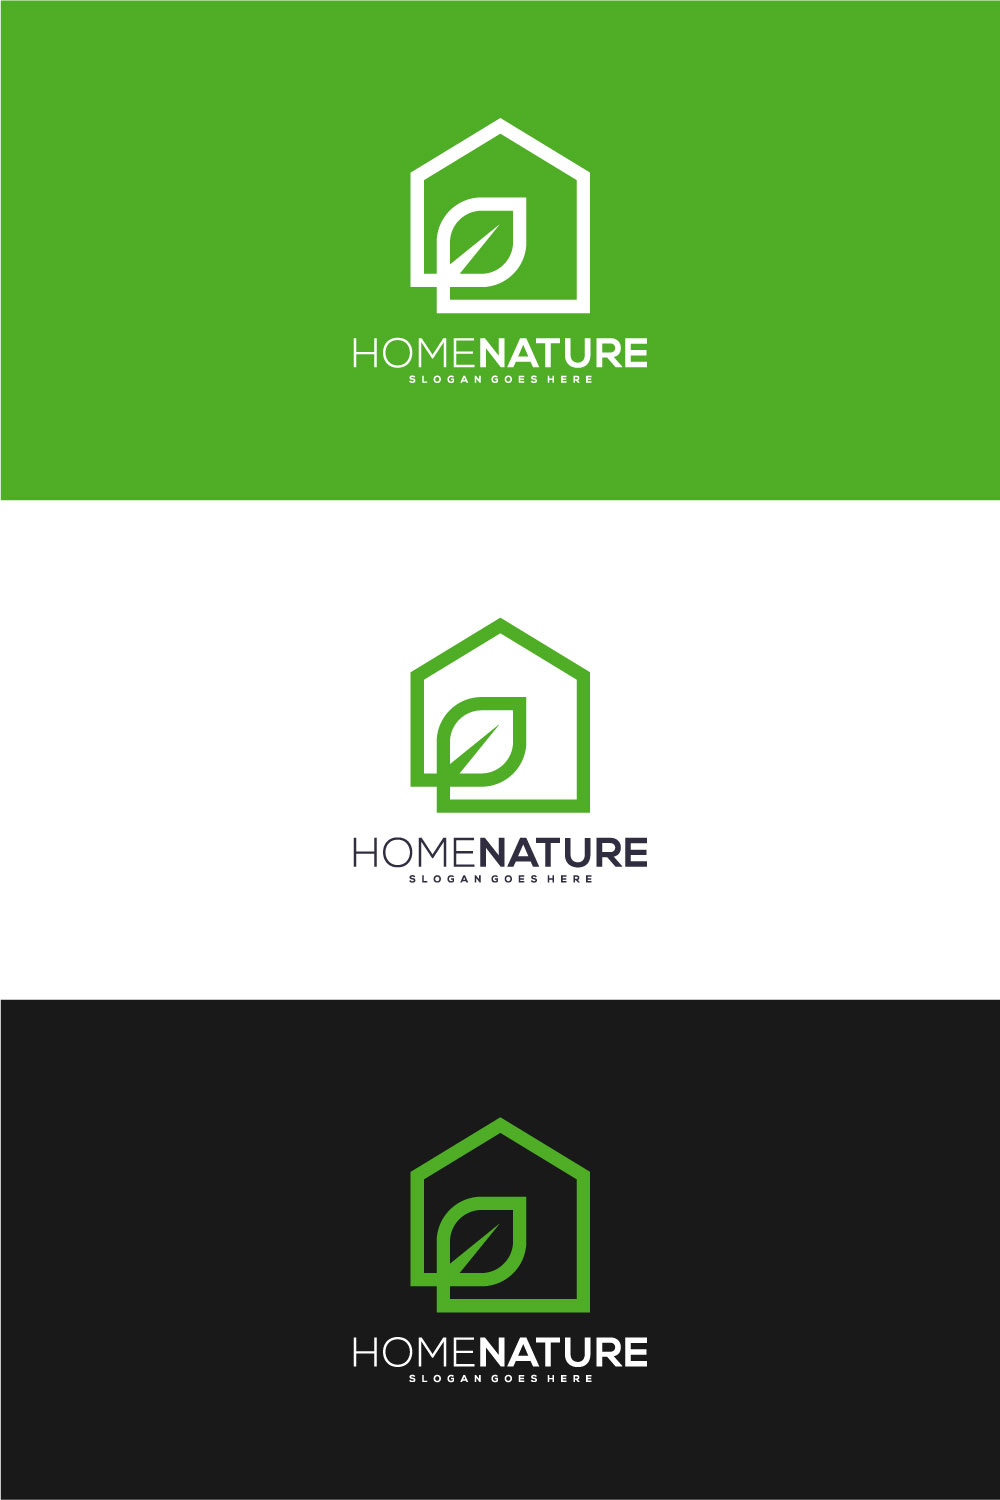 Home Nature Logo Beautiful Vector Design Pinterest Image.